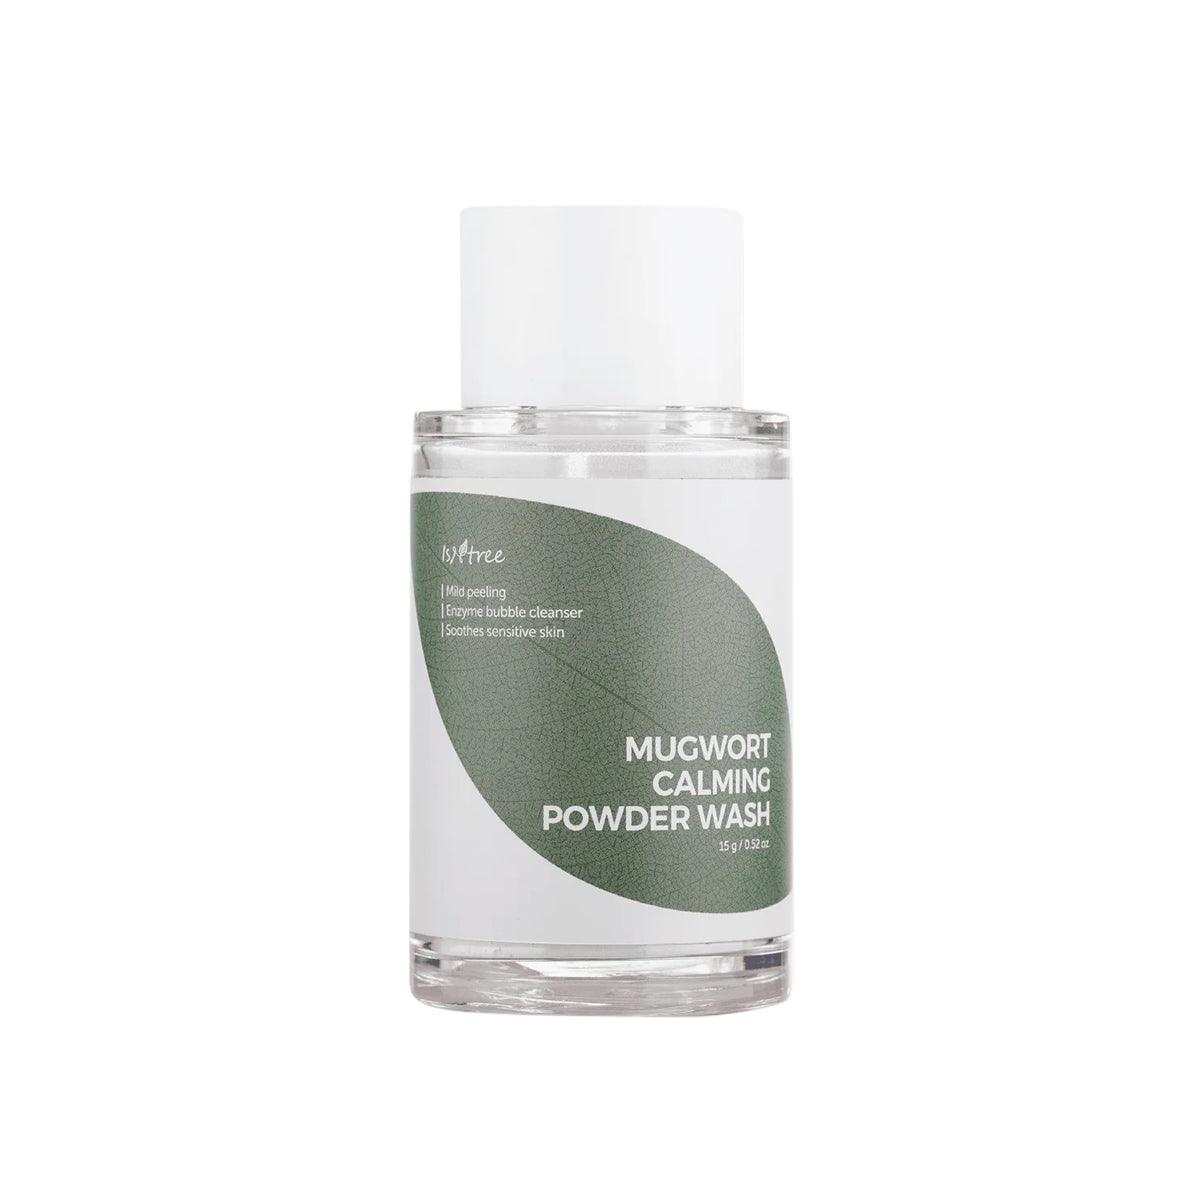 Mugwort Calming Powder Wash - 15g - K-Beauty Arabia